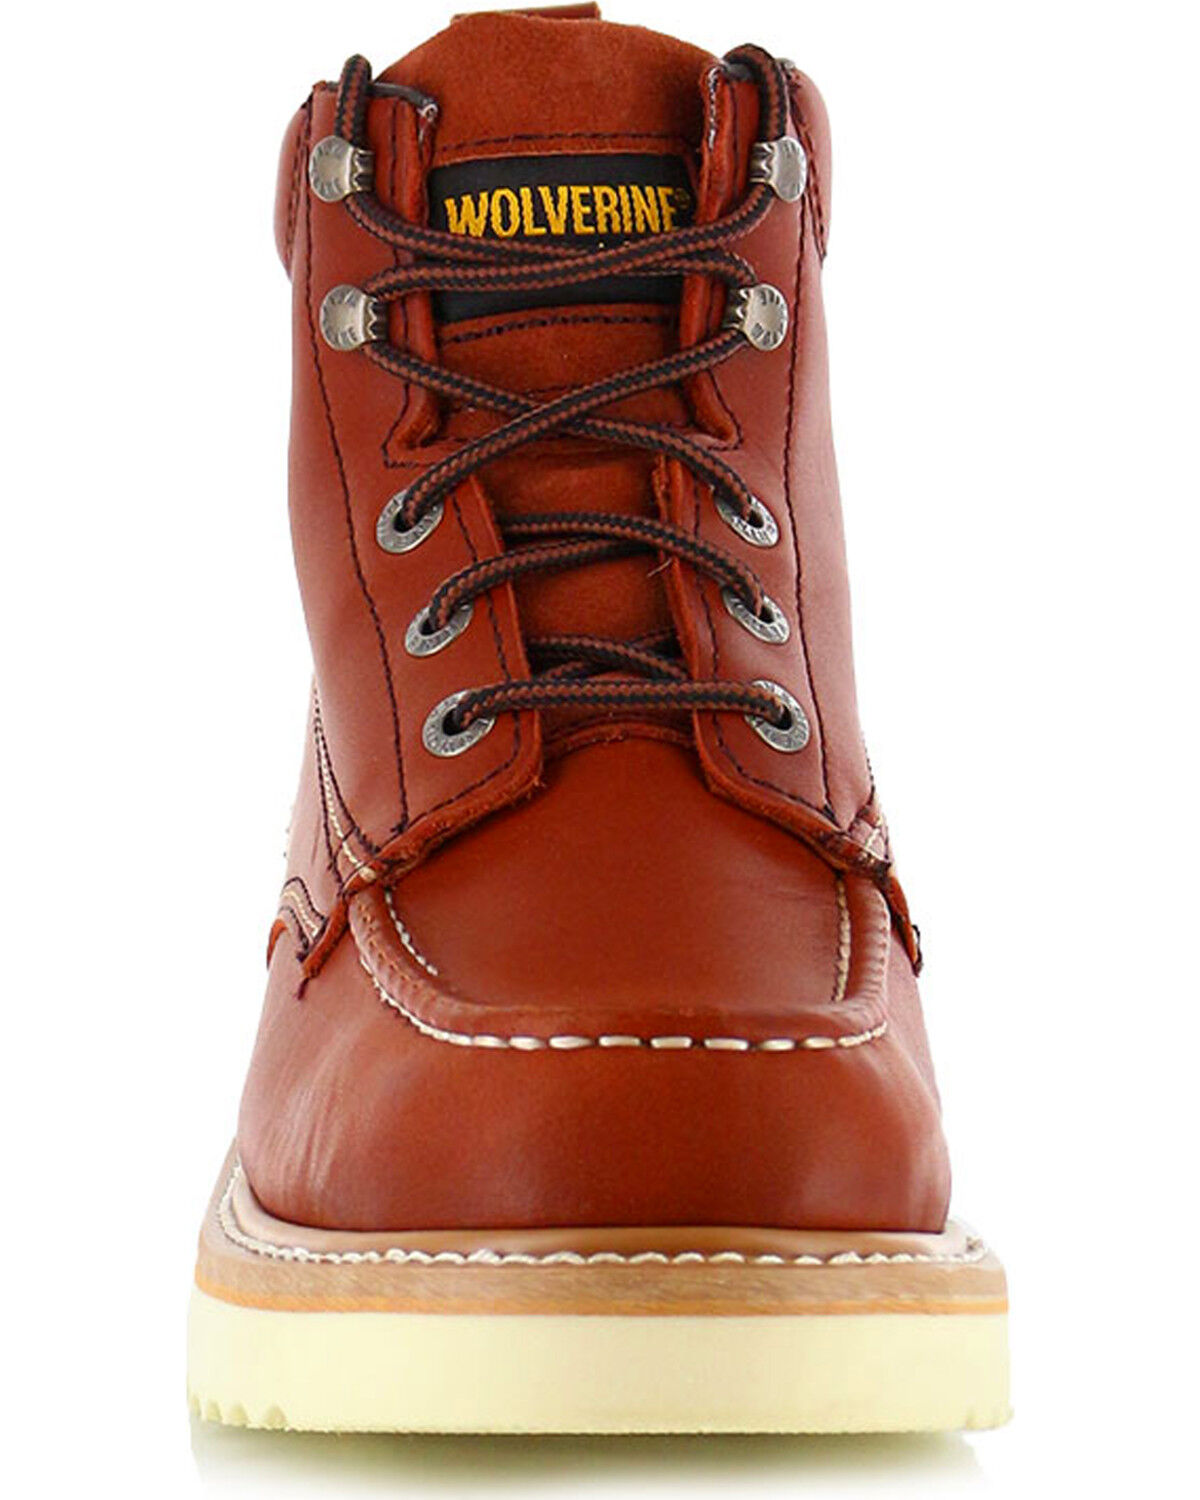 wolverine men's moc toe work boots